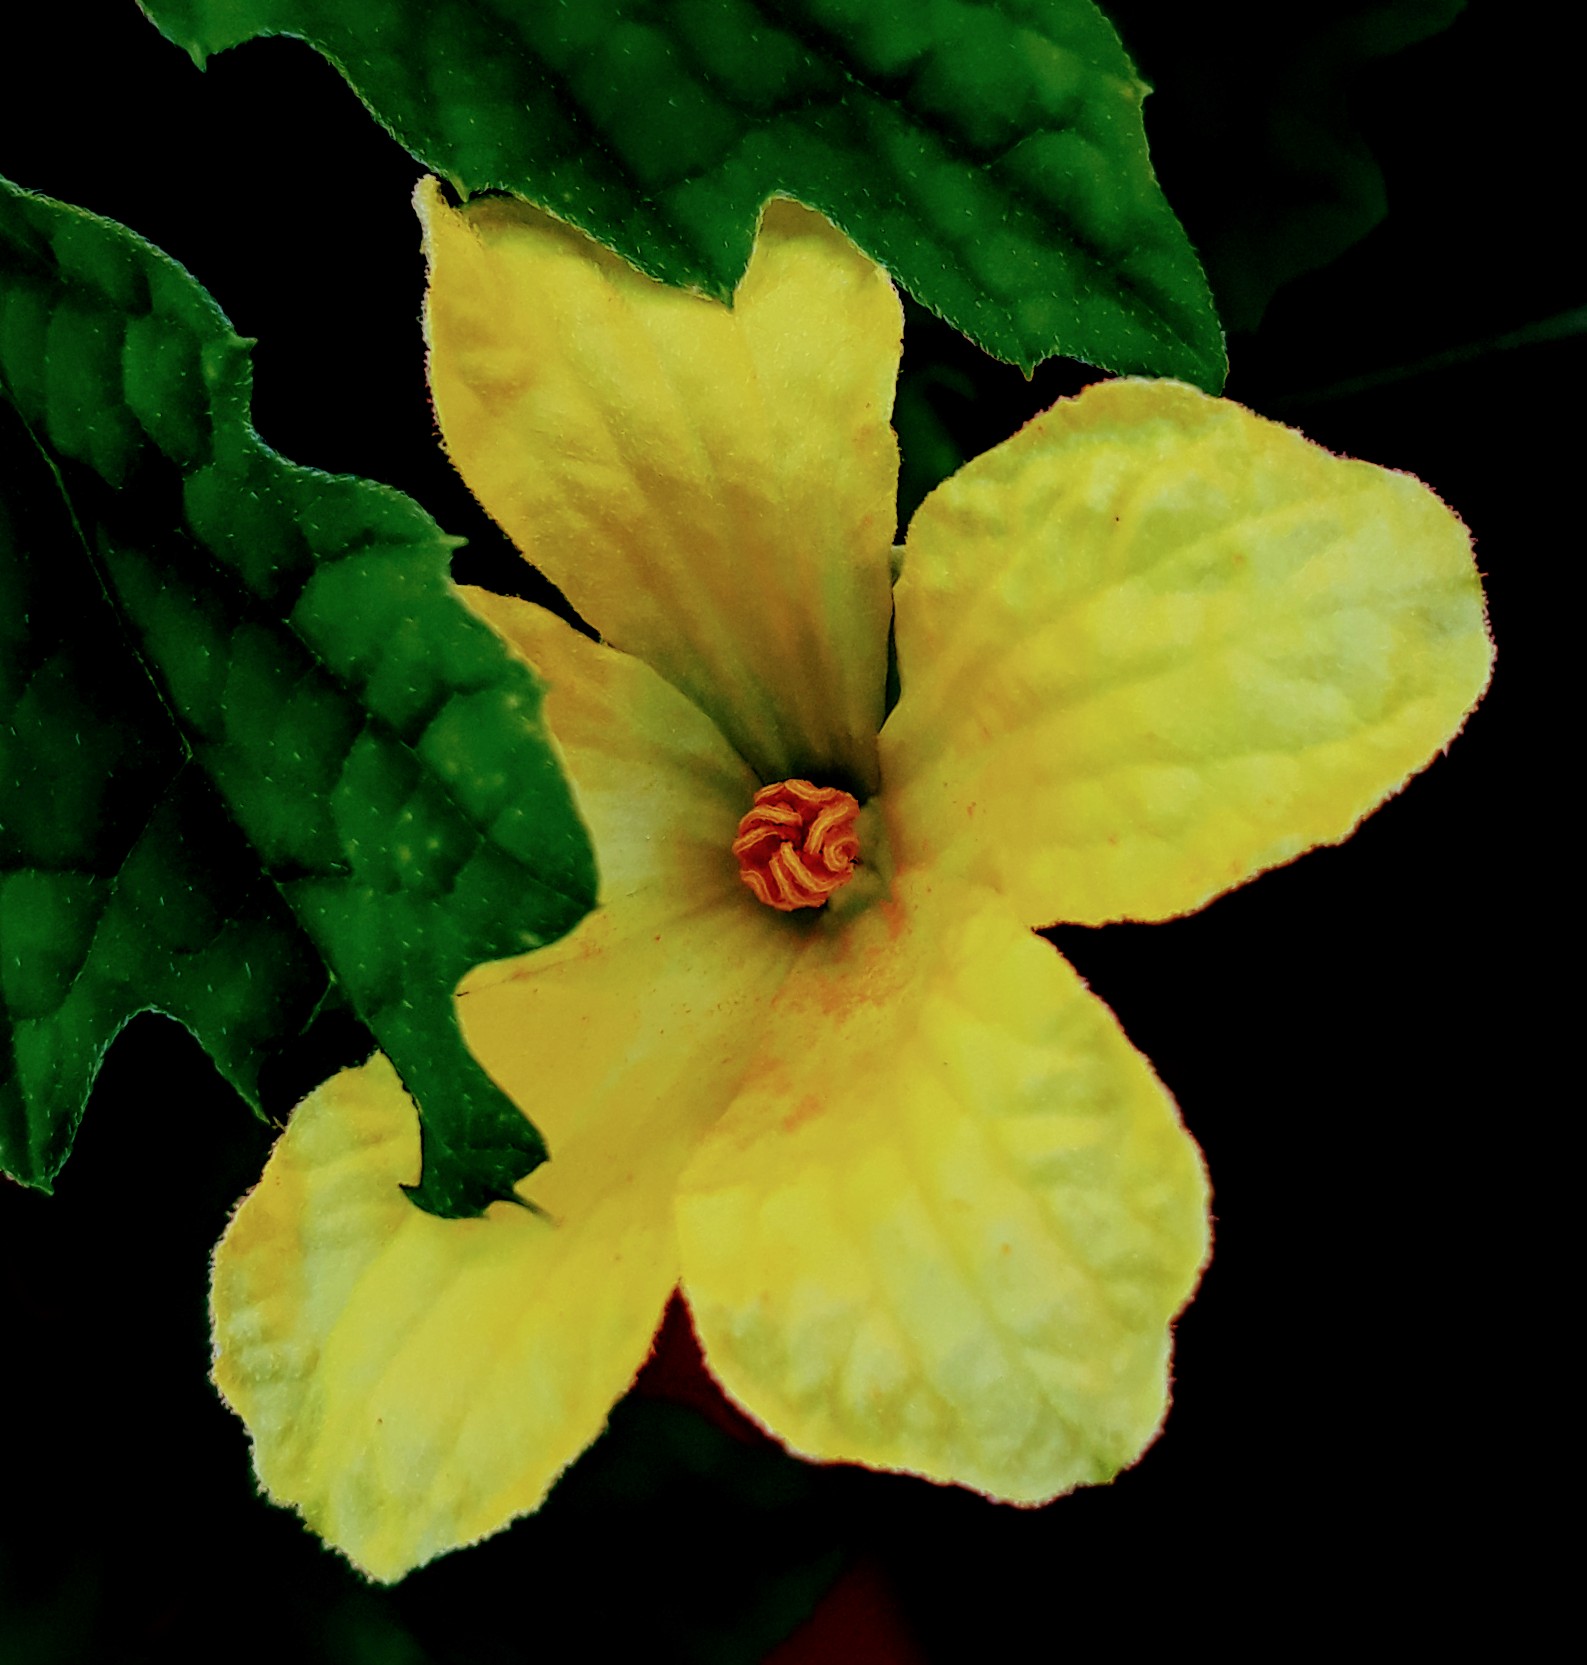 male flower of a bitter gourd